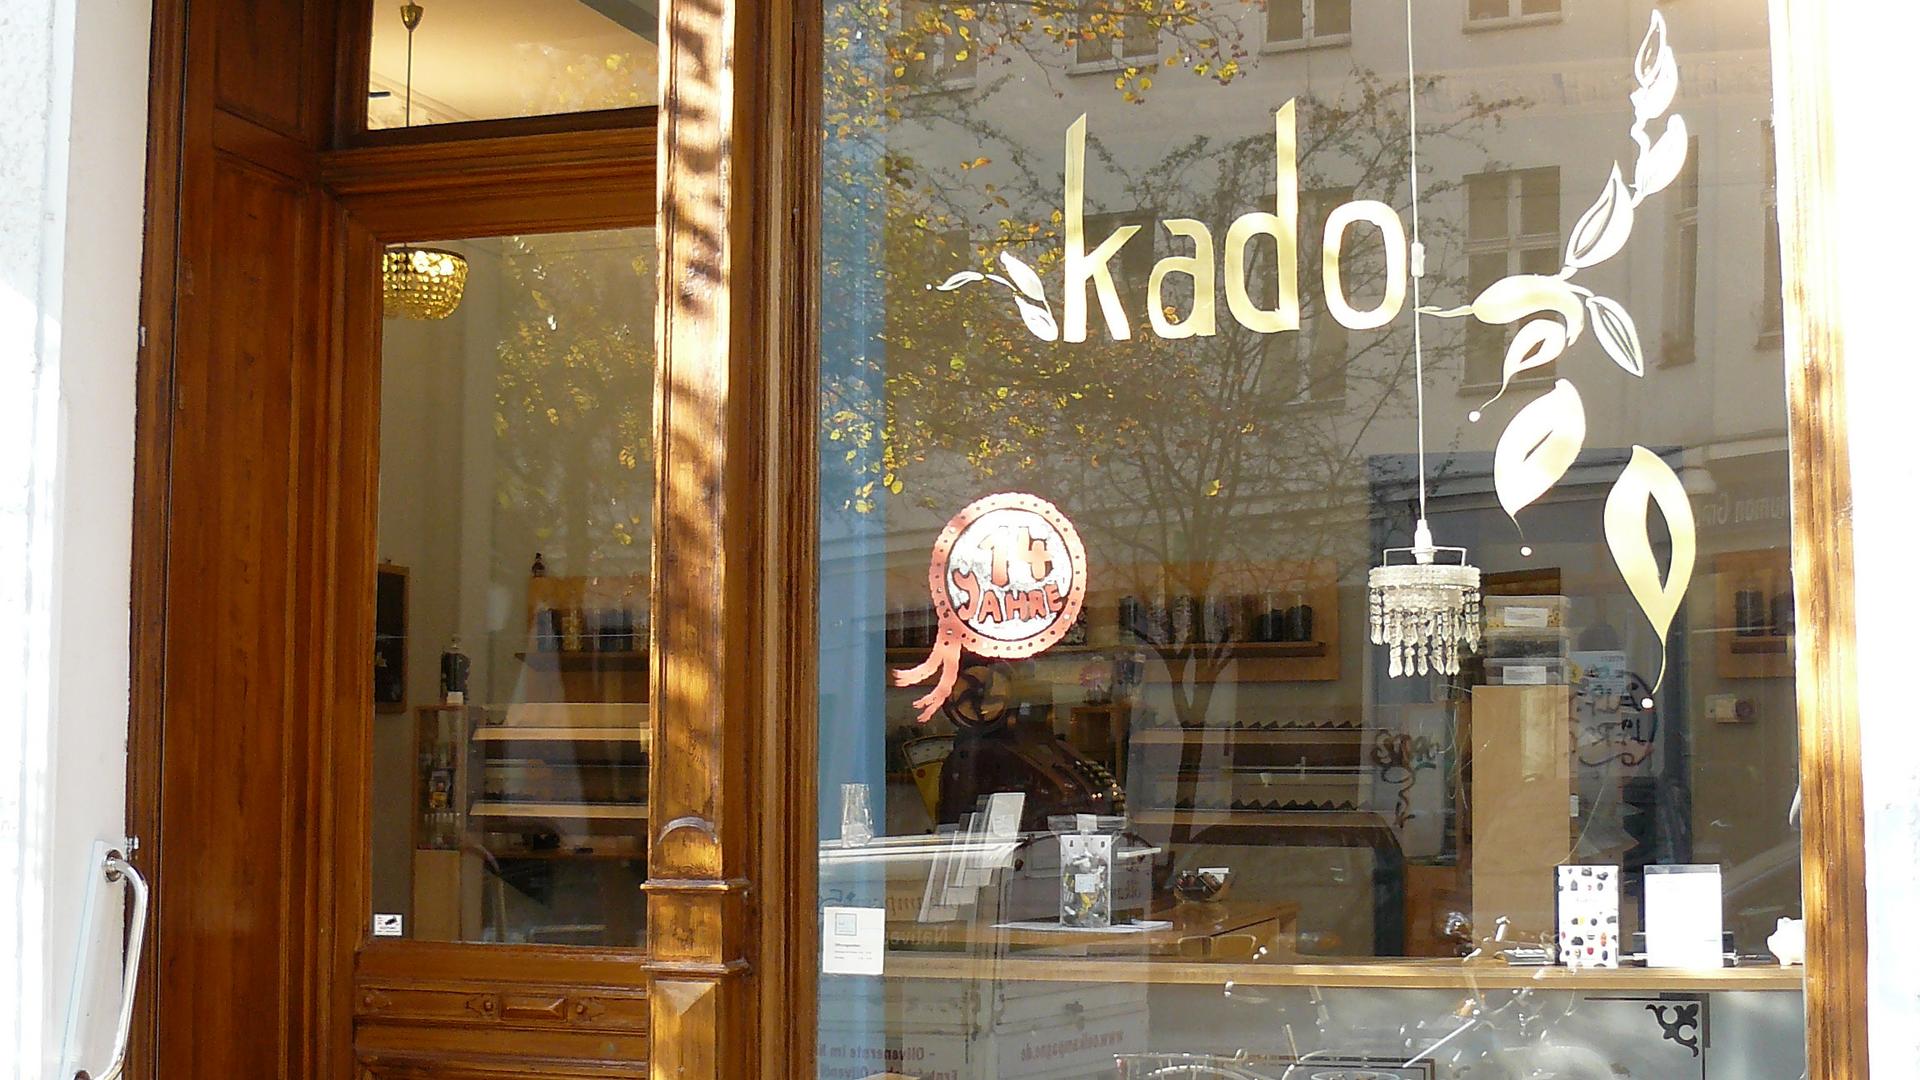 The Kado licorice shop in Graefekiez, Berlin.